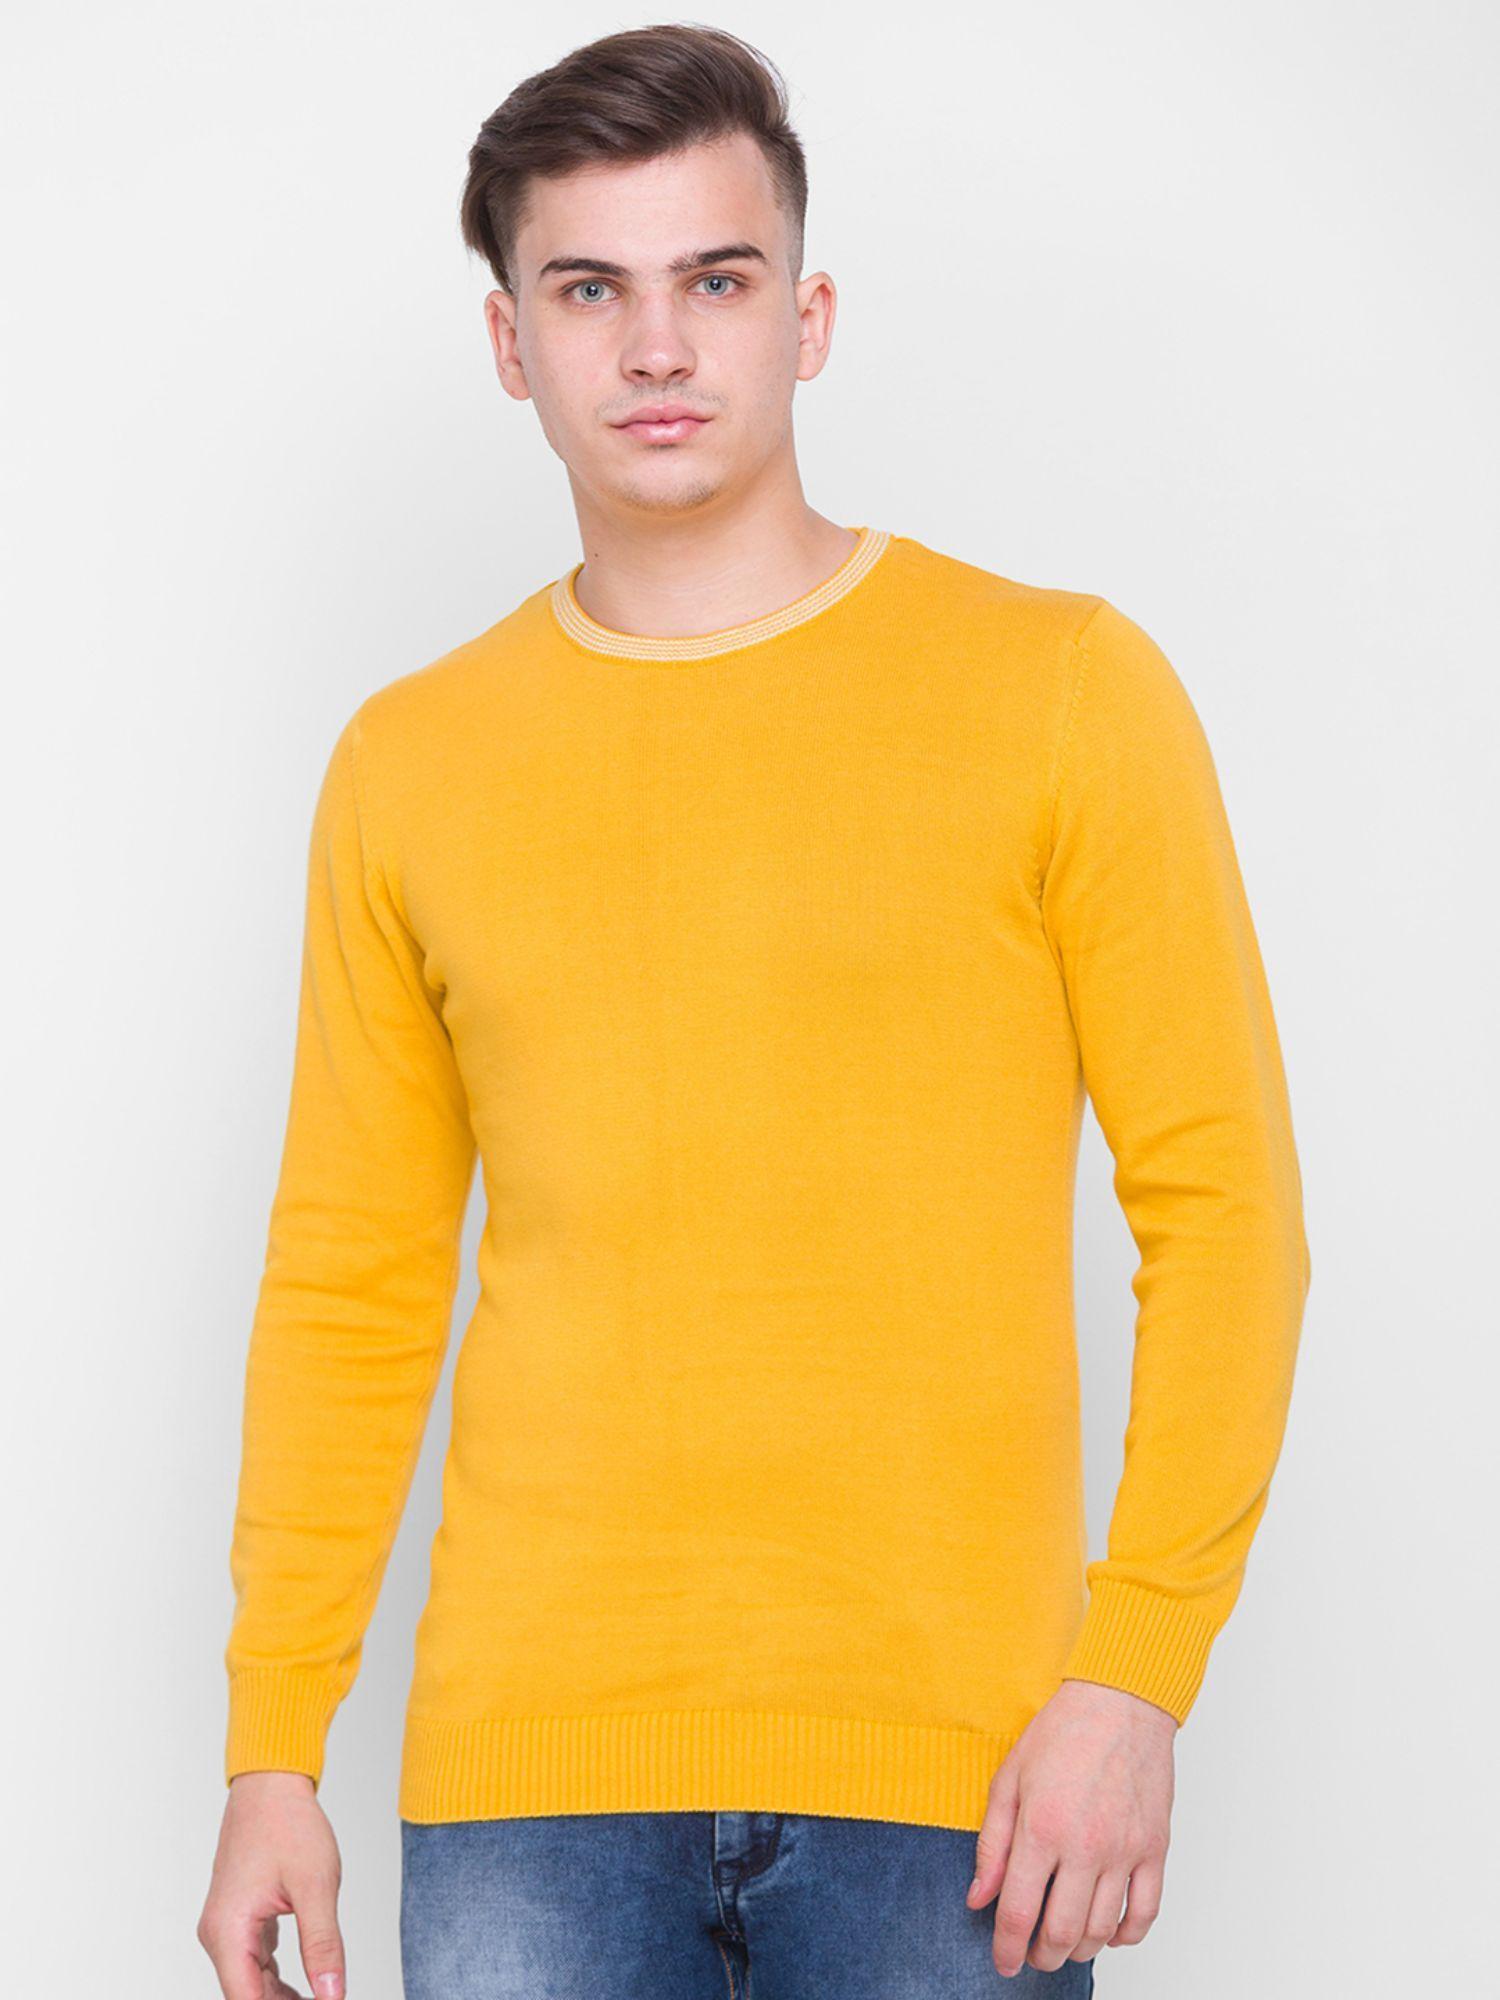 solid mustard sweater